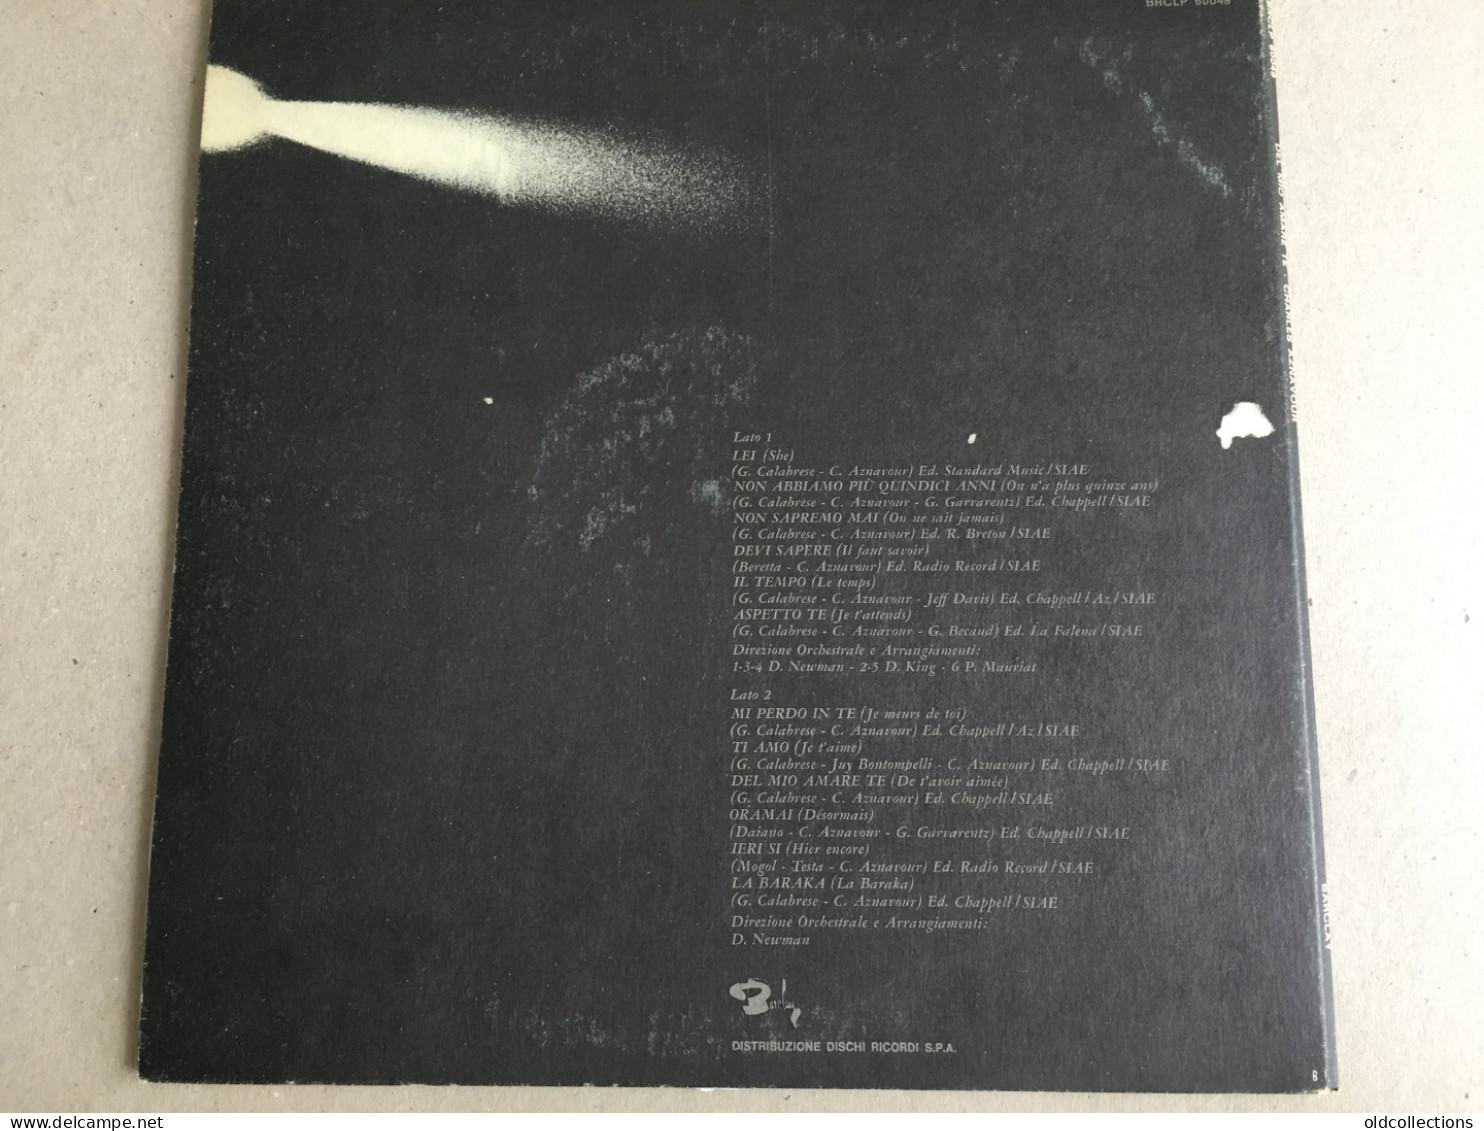 Schallplatte Vinyl Record Disque Vinyle LP Record - Charles Aznavour Del Mio Amare Te - Vinyl + Album Photo - Other - Italian Music